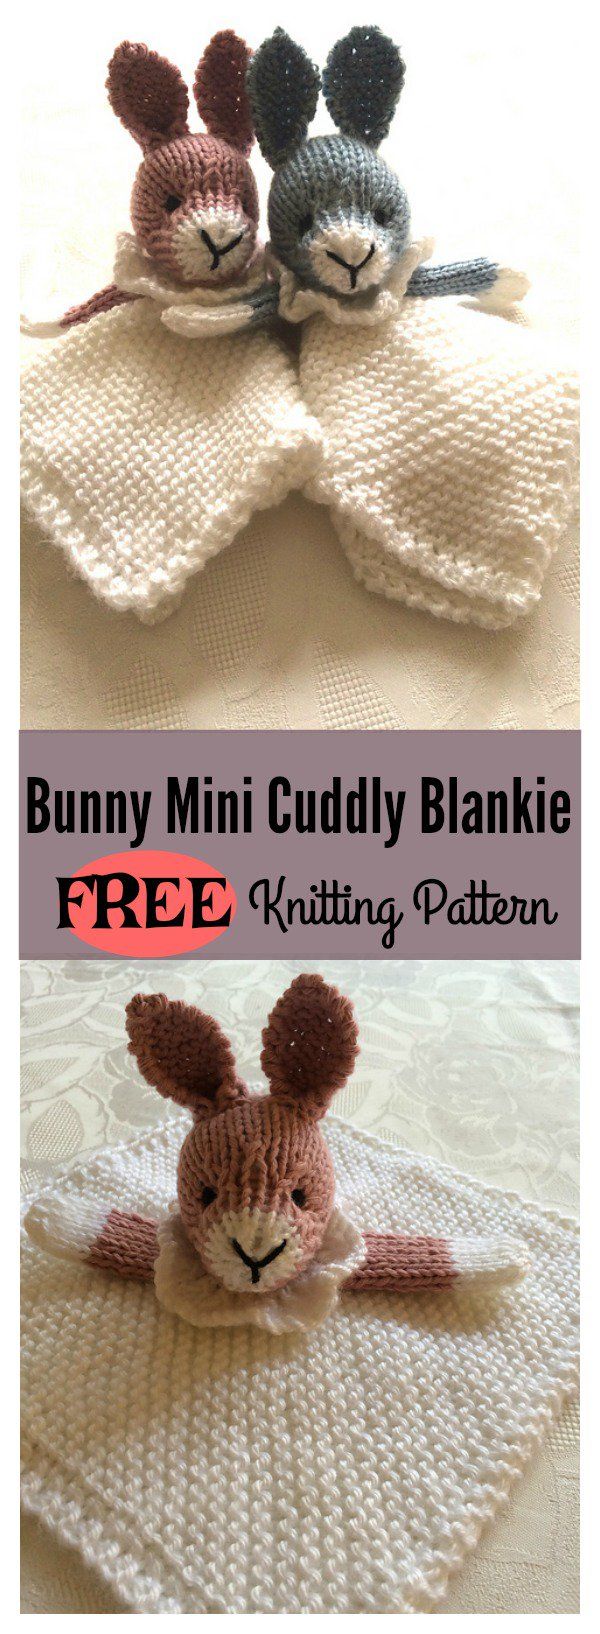 Bunny-Mini-Cuddly-Blankie-Free-Knitting-Pattern.jpg